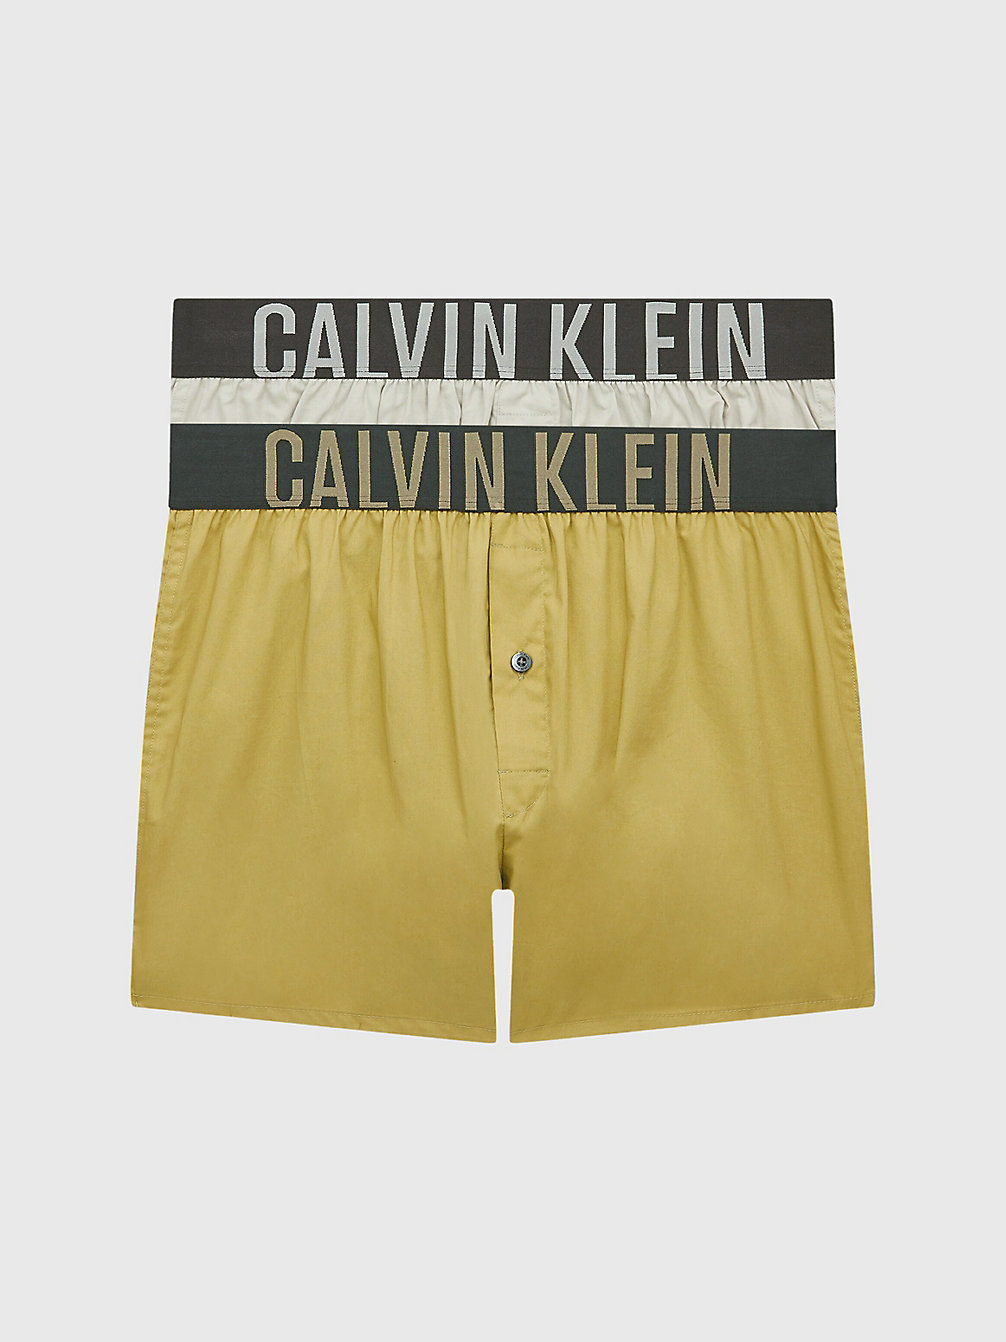 Boxer Slim In Confezione Da 2 - Intense Power > OCEAN MIST GREY/ PISTCHE > undefined uomo > Calvin Klein